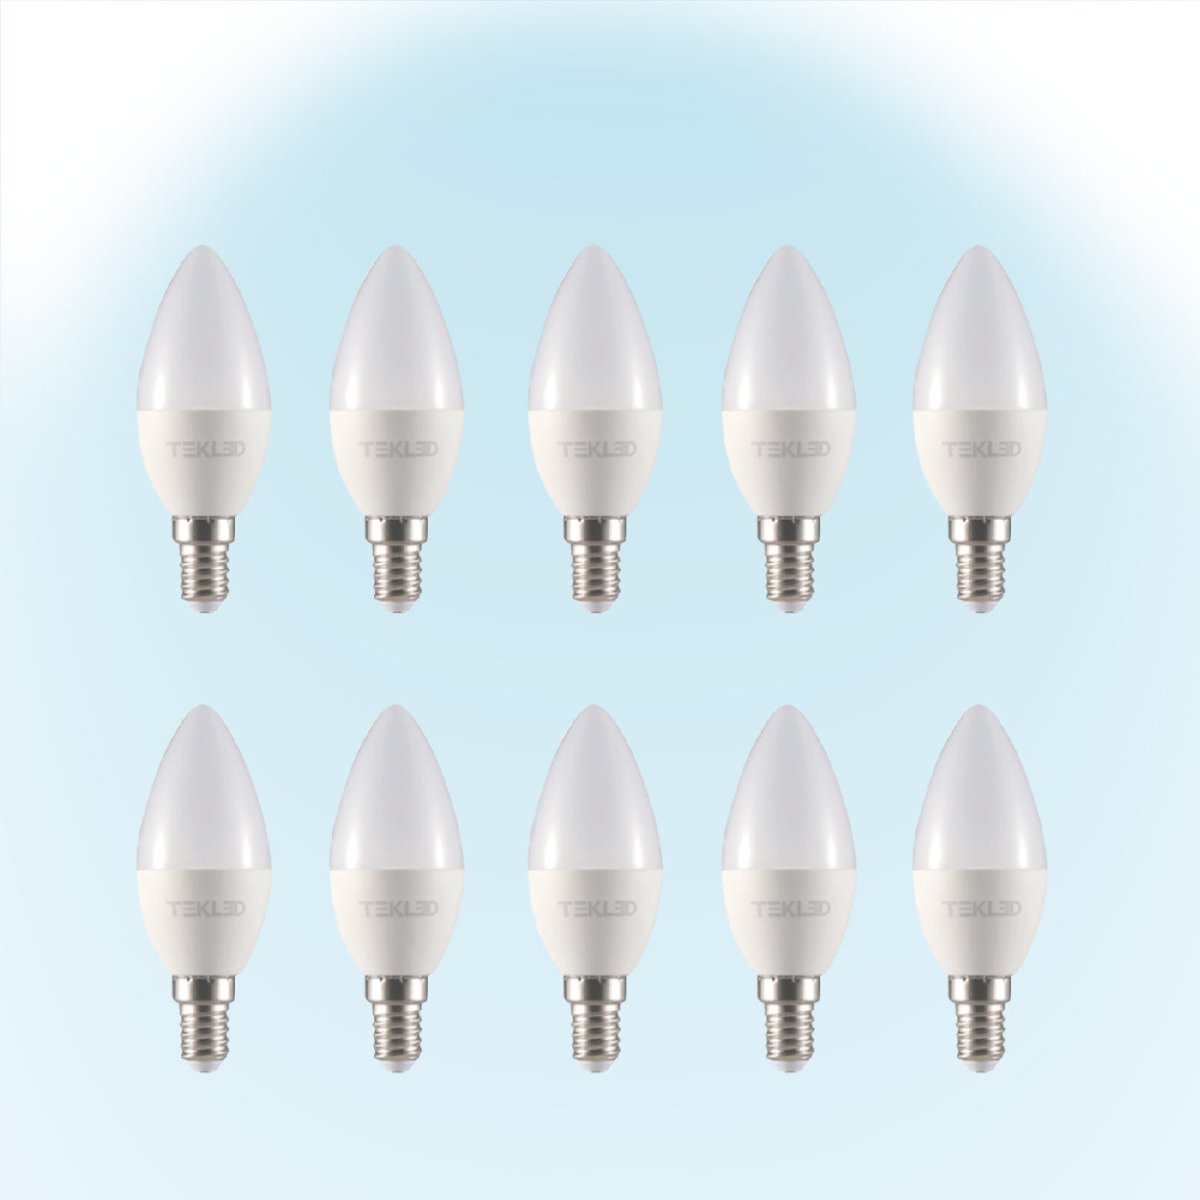 Vela LED Candle Bulb C37 E14 Small Edison Screw 5W pack of 10 cool daylight